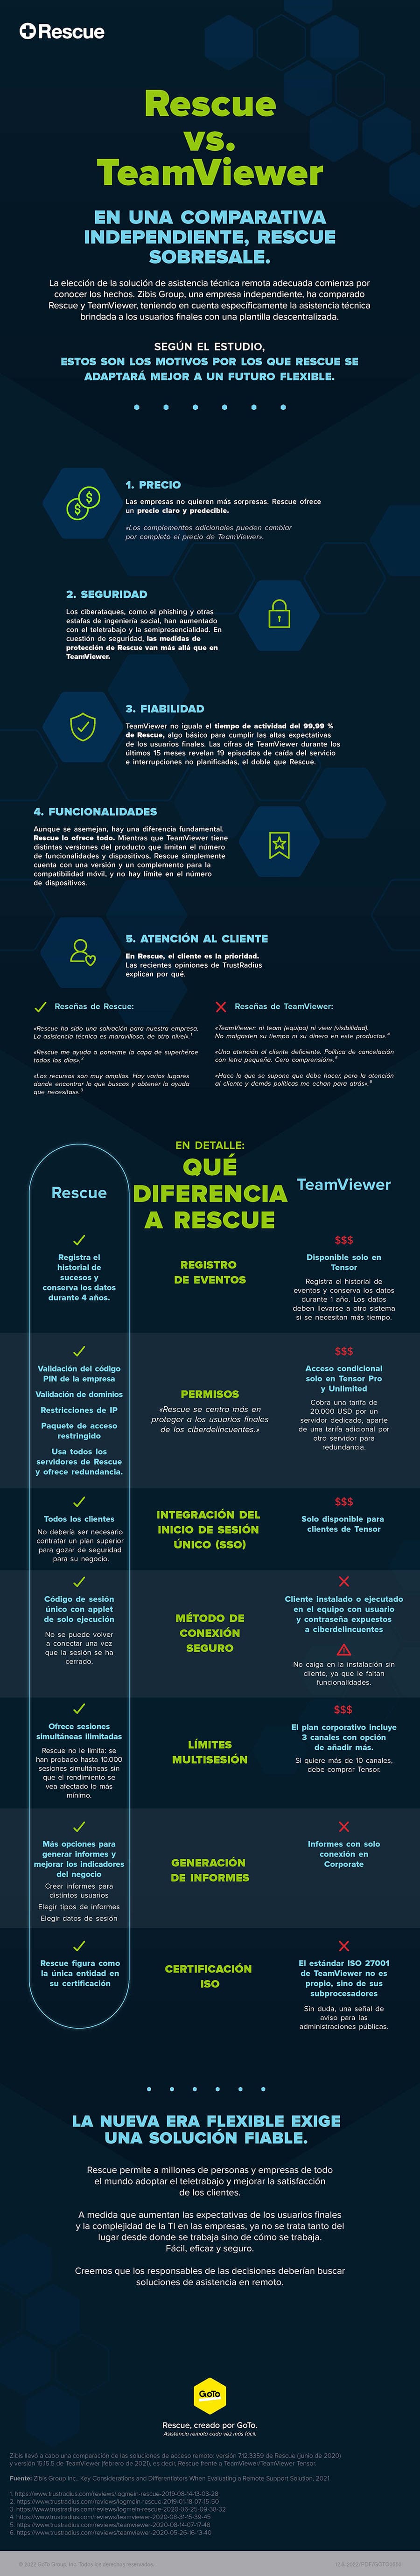 LogMeIn Rescue vs TeamViewer.